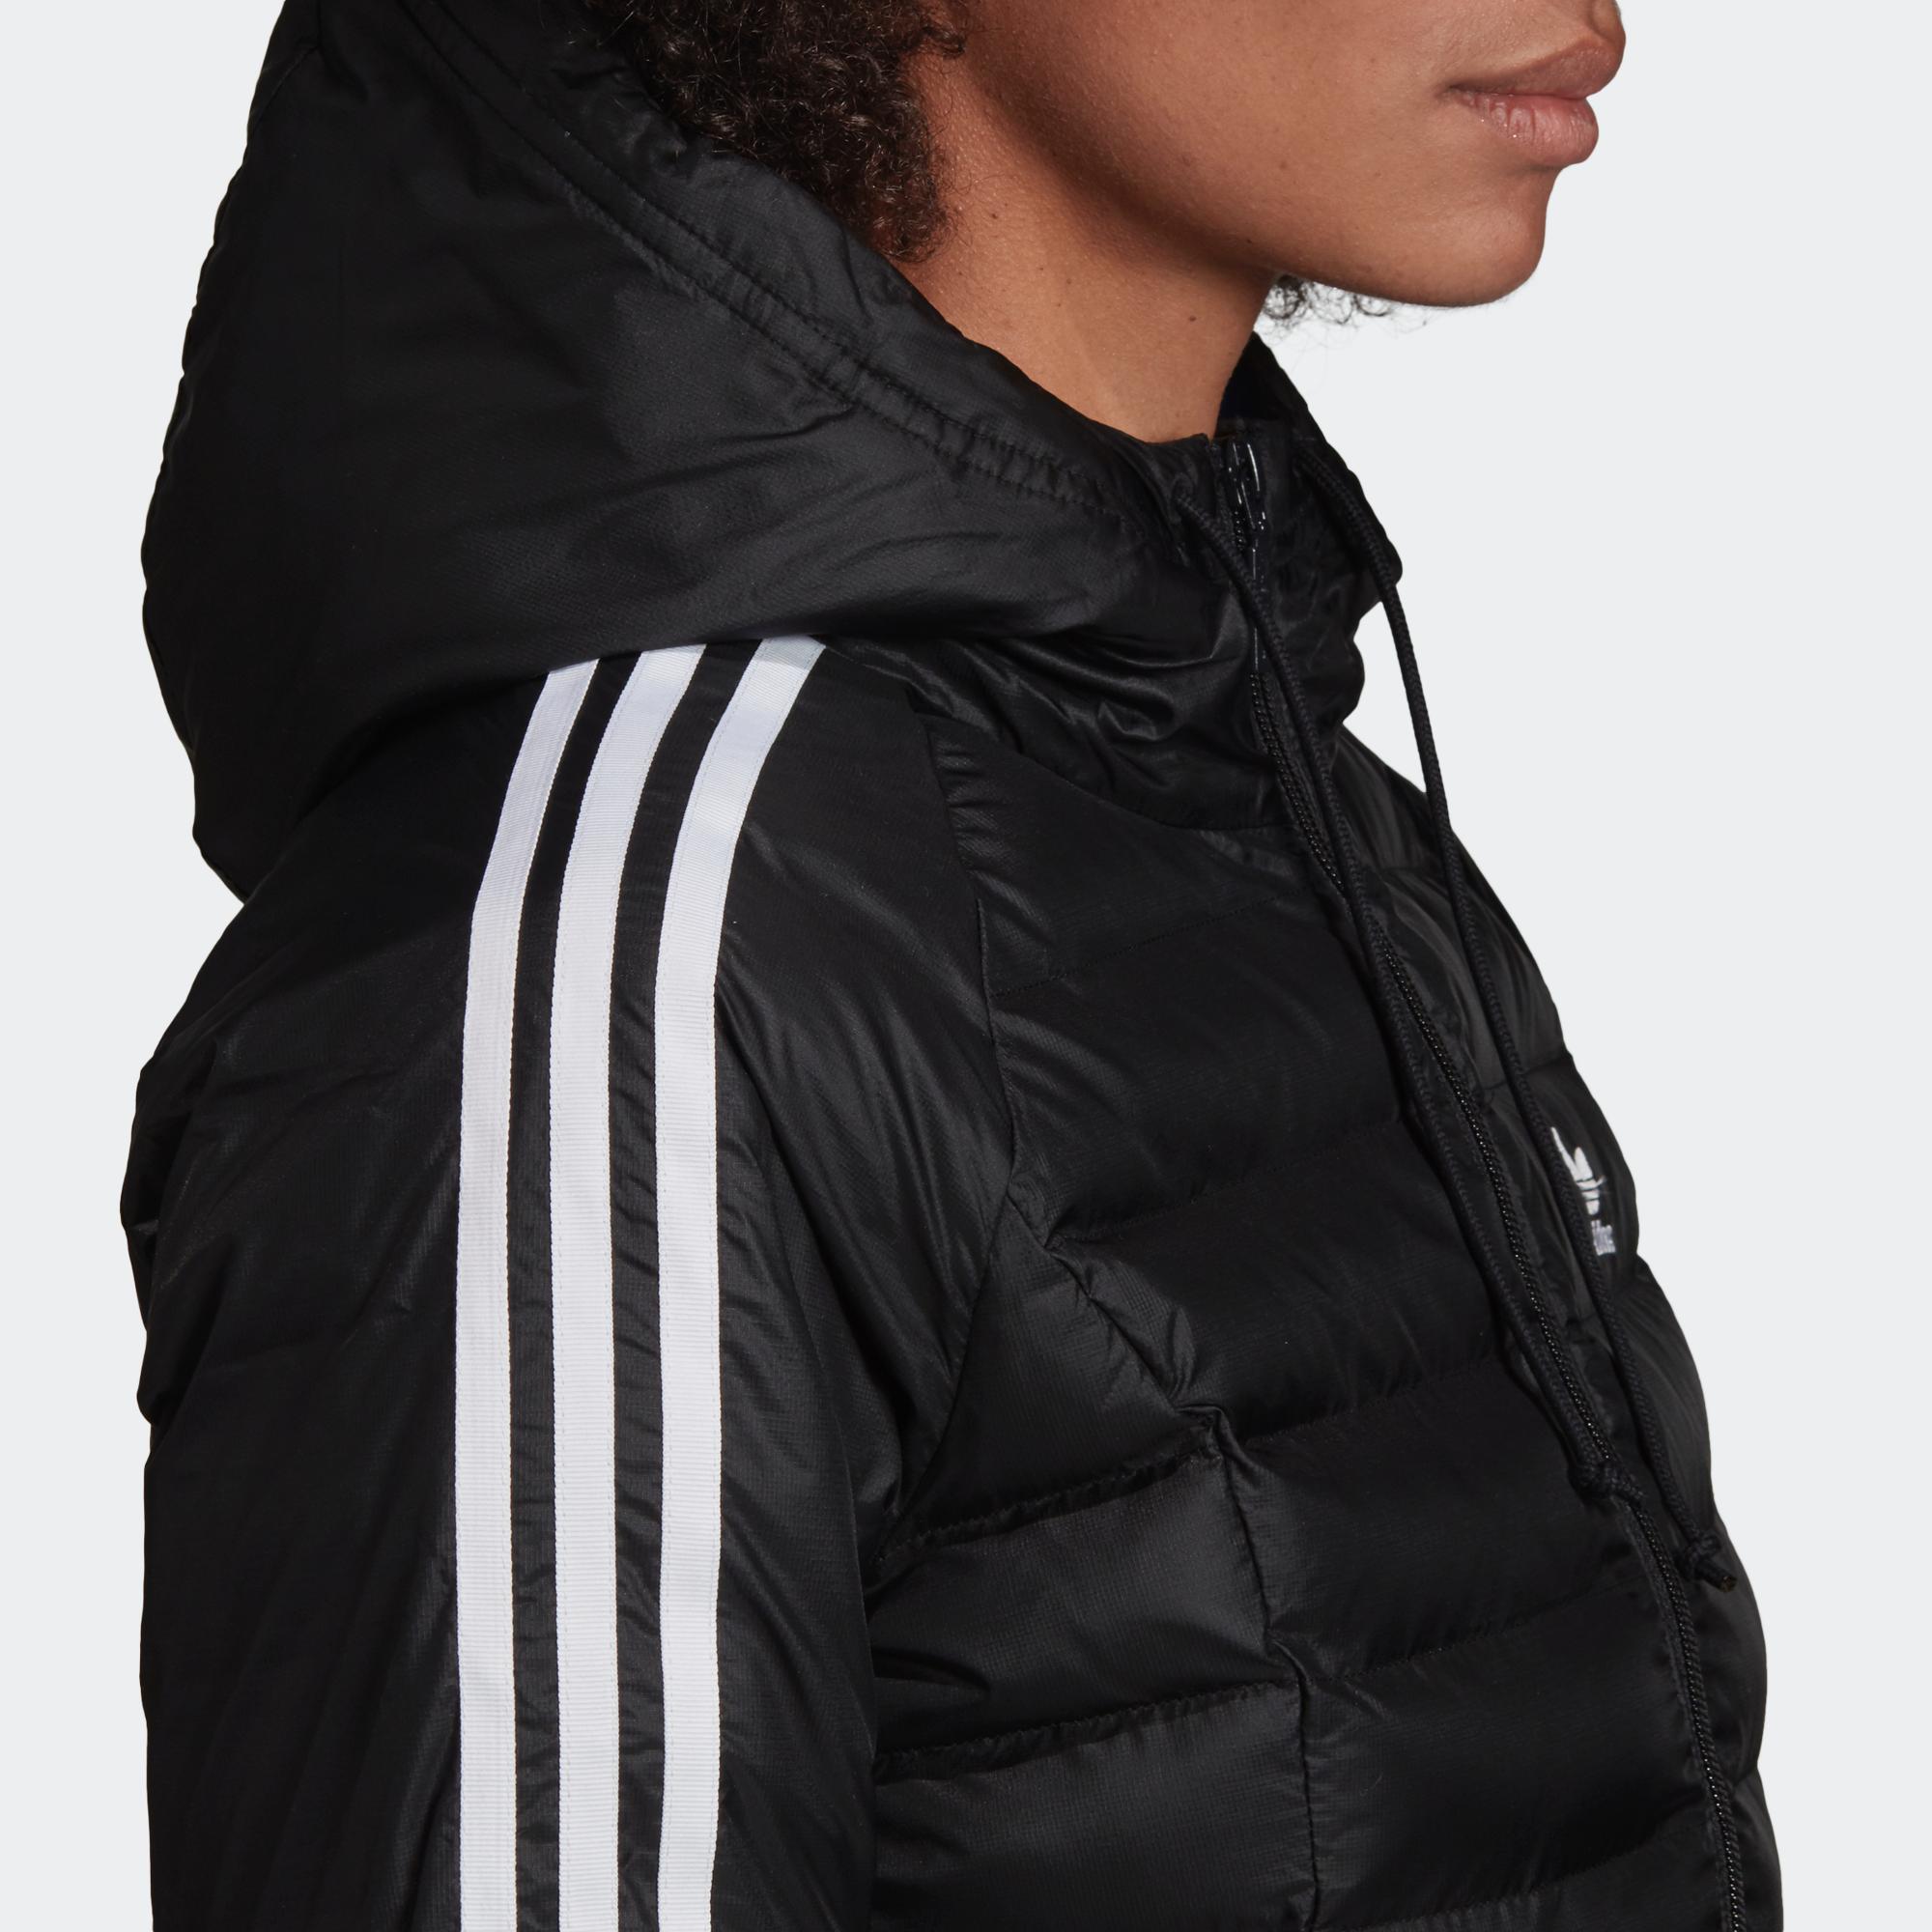 Черная куртка адидас. Куртка adidas Slim Jacket Black. Куртка адидас ed4736. Adidas Originals черный Jackets. Adidas Slim Jacket.